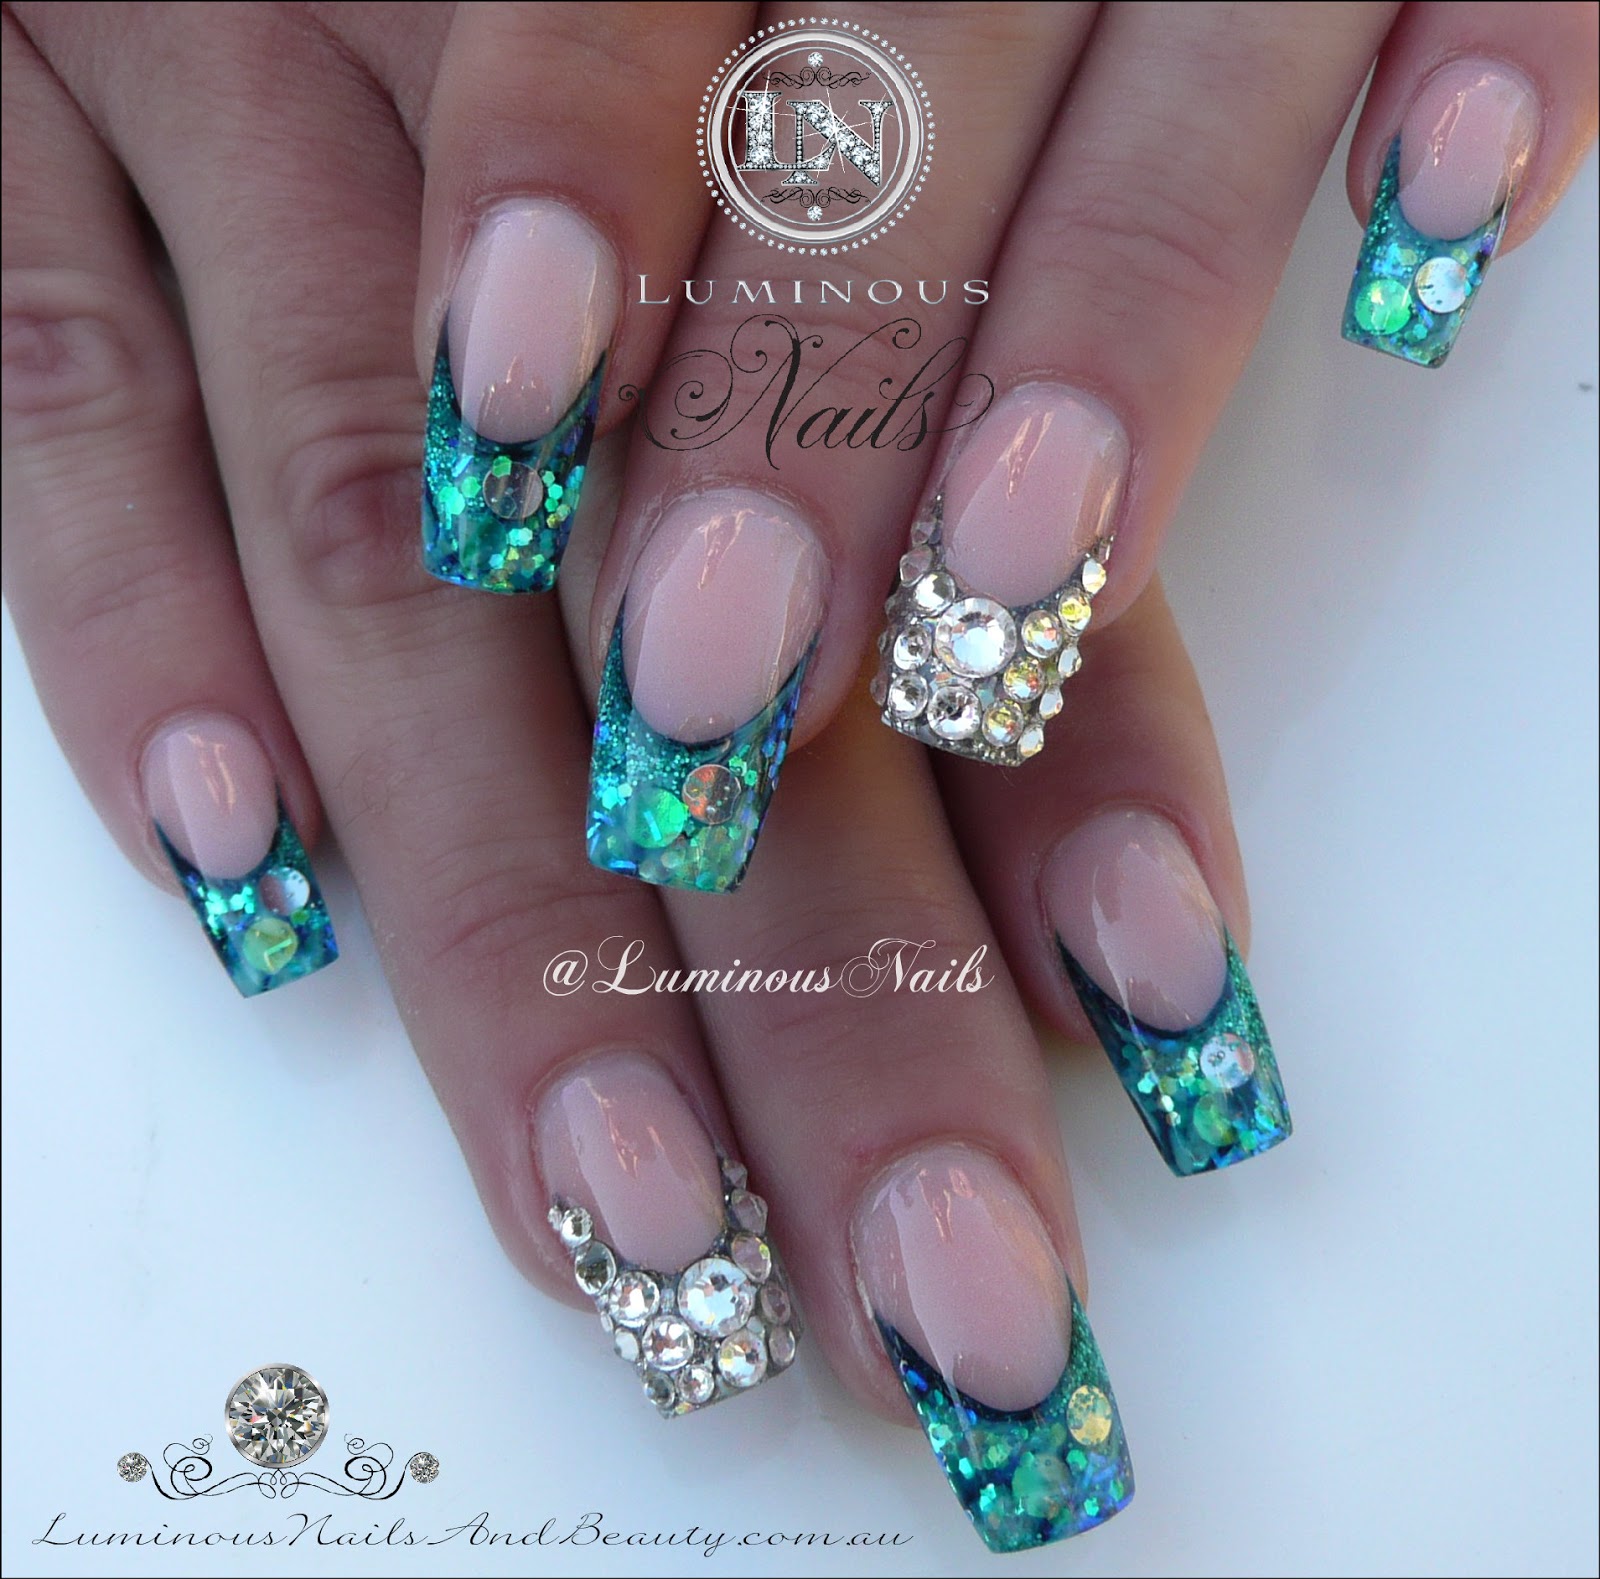 Luminous Nails: Paua Shell Nails with Swarovski Crystal Feature Nails...